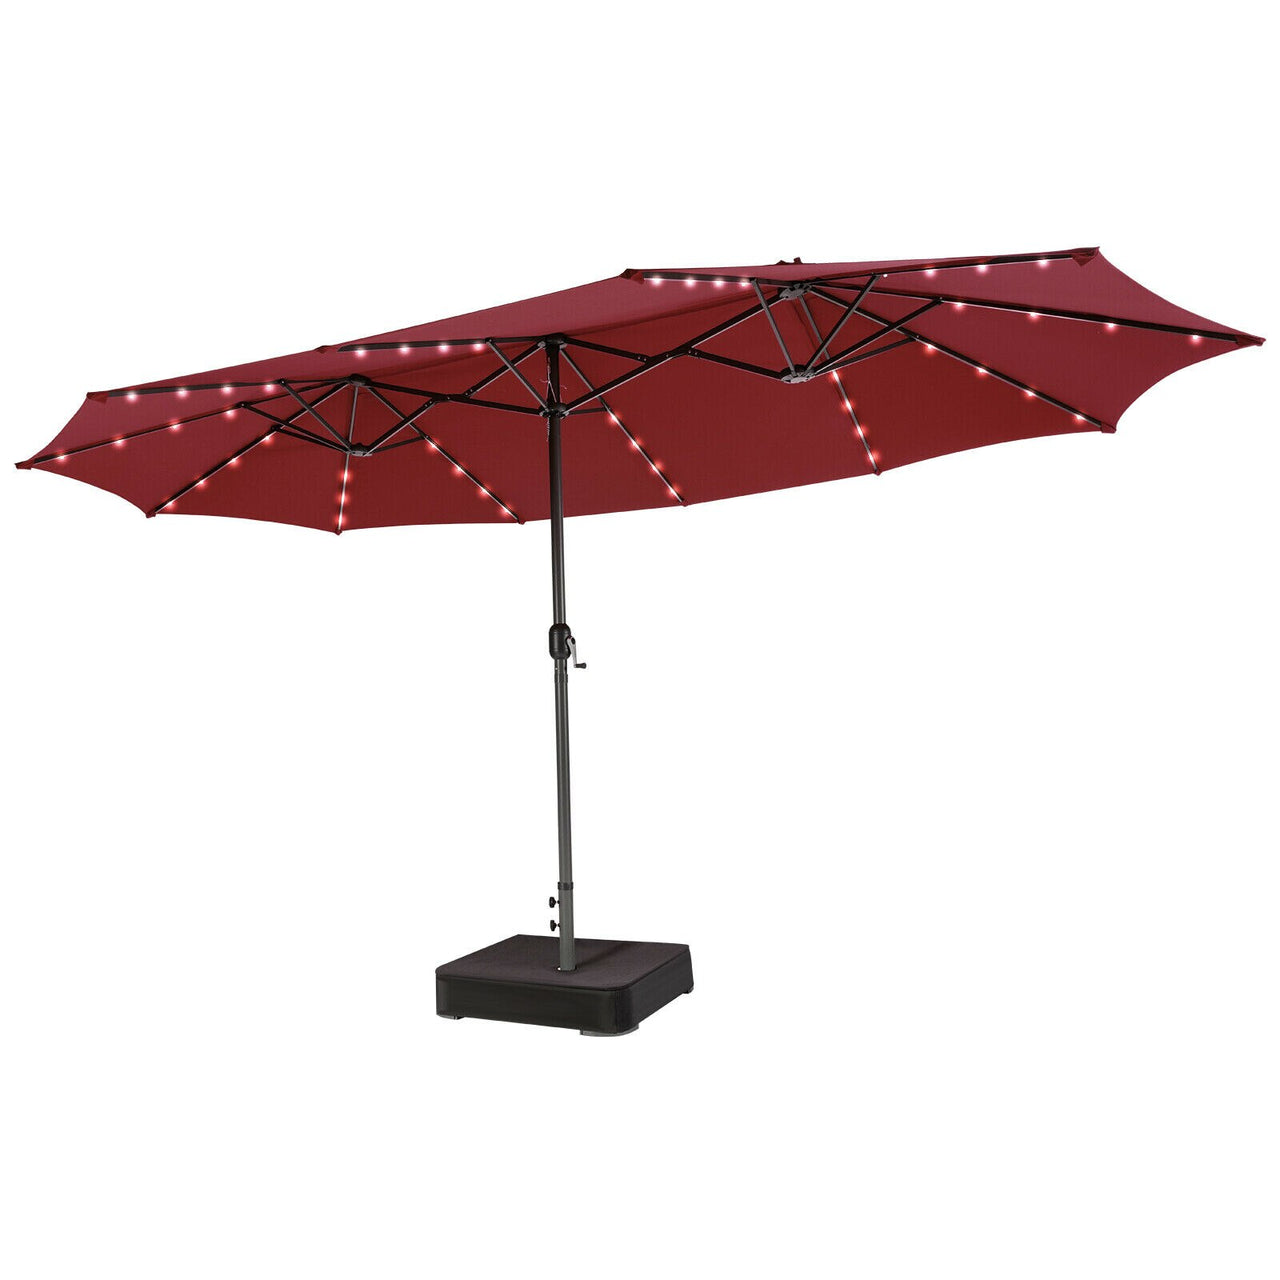 15ft Patio Market Umbrella with base